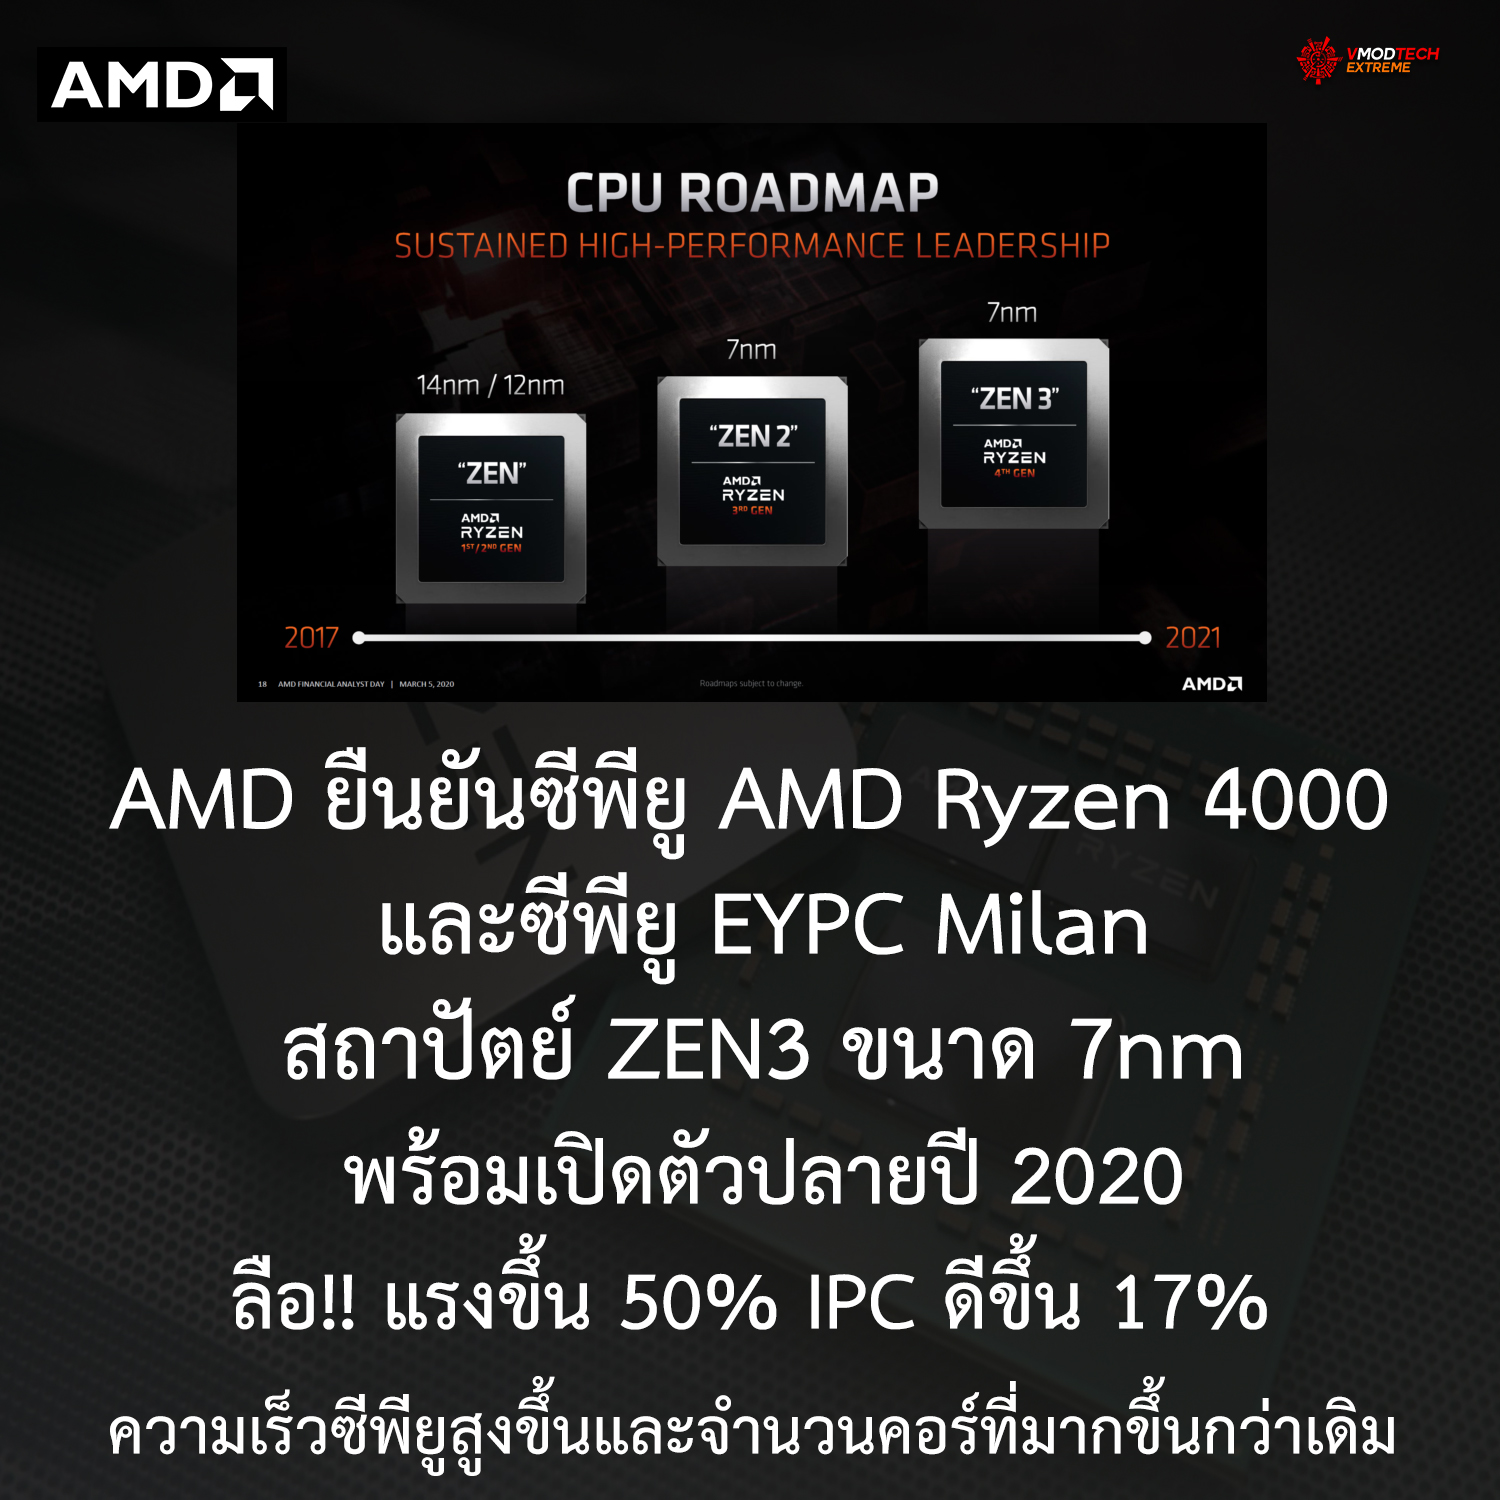 amd ryzen 4000 zen31 AMD ยืนยันซีพียู AMD Ryzen 4000 สถาปัตย์ ZEN3 และซีพียู EYPC สถาปัตย์ Milan พร้อมเปิดตัวในปลายปีนี้ 